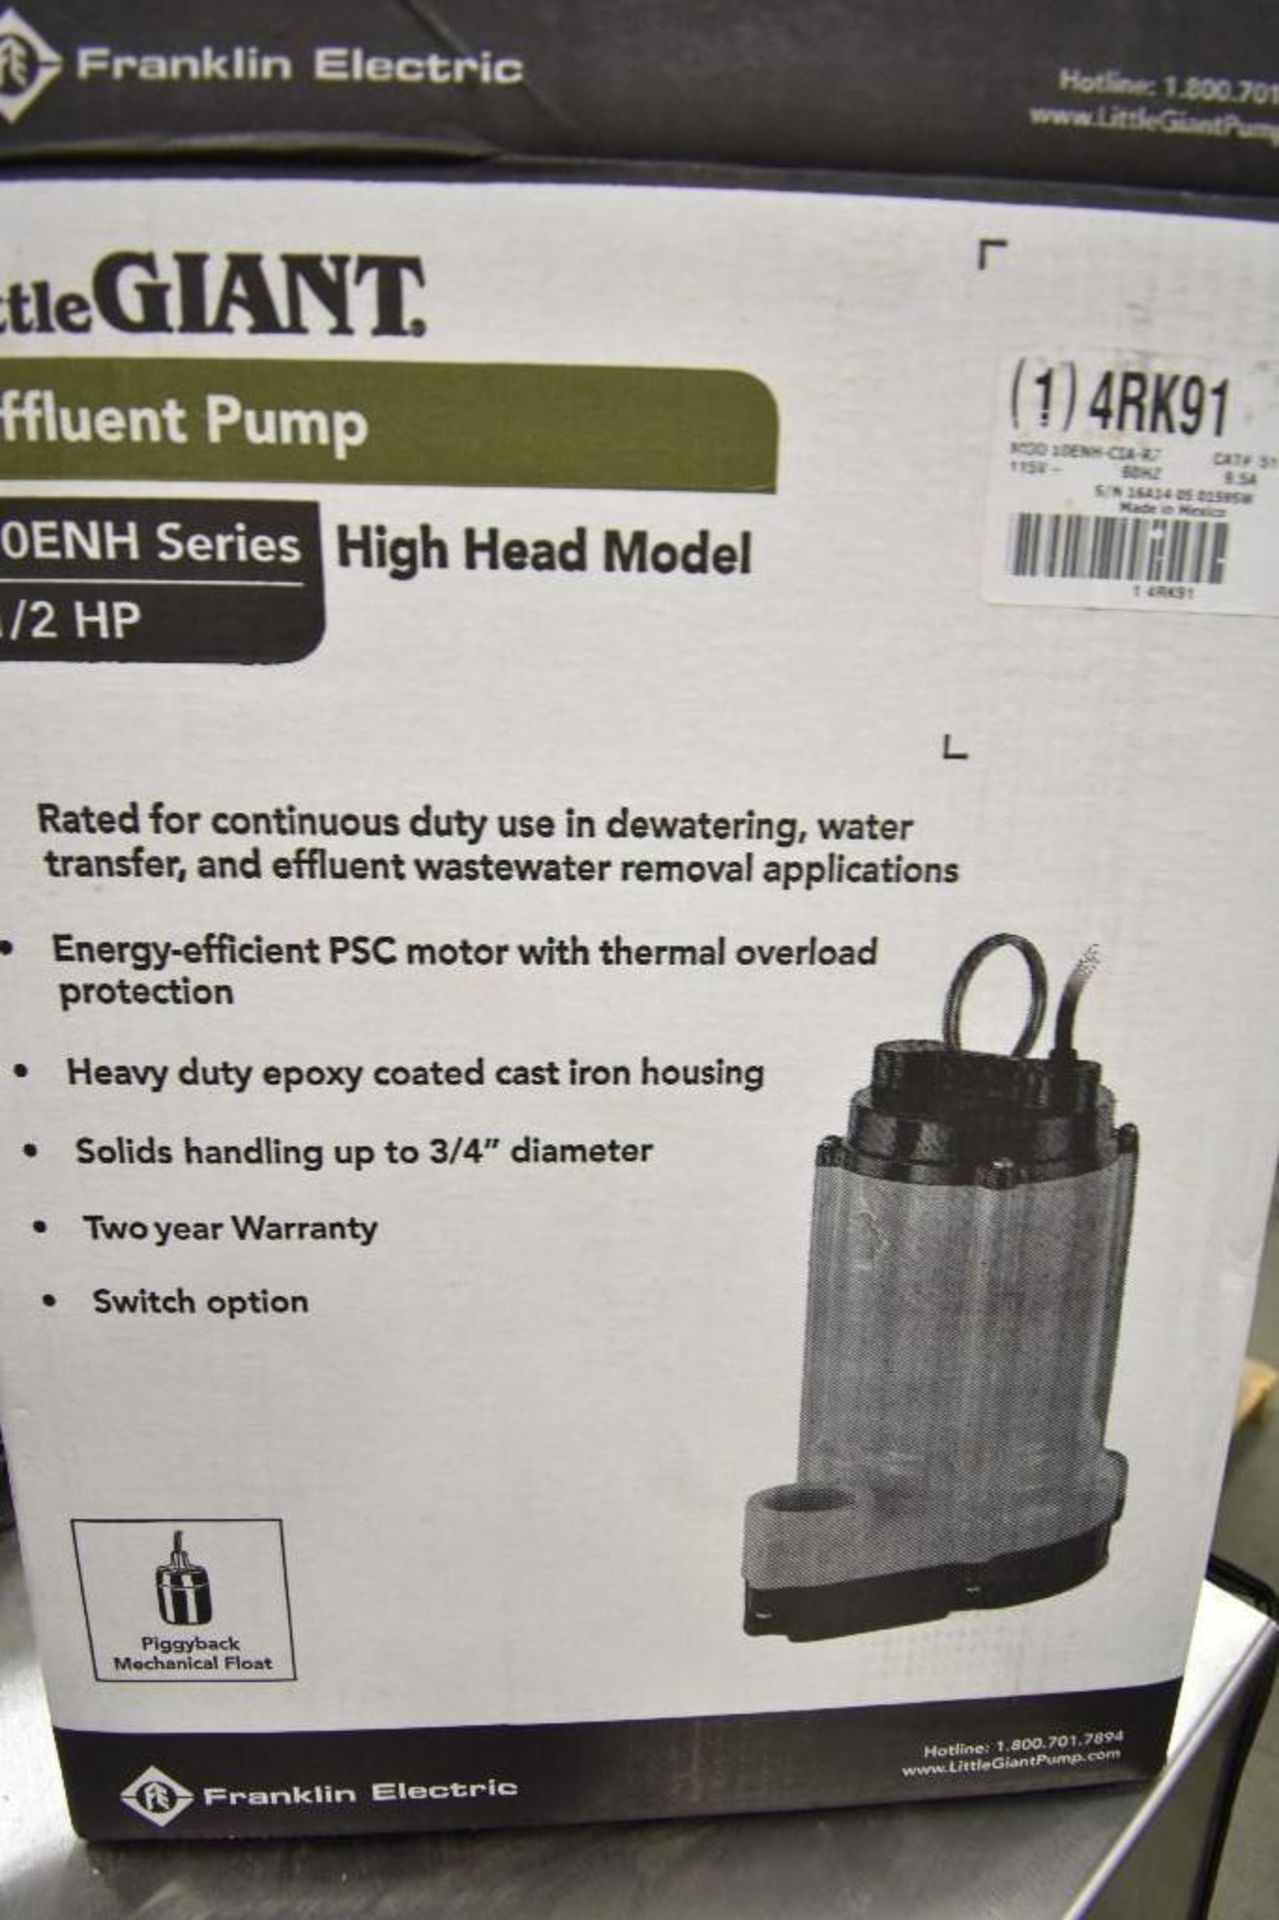 Little Giant Effluent Pump. High Head Model. Series 10ENH, 1/2hp - Image 8 of 8